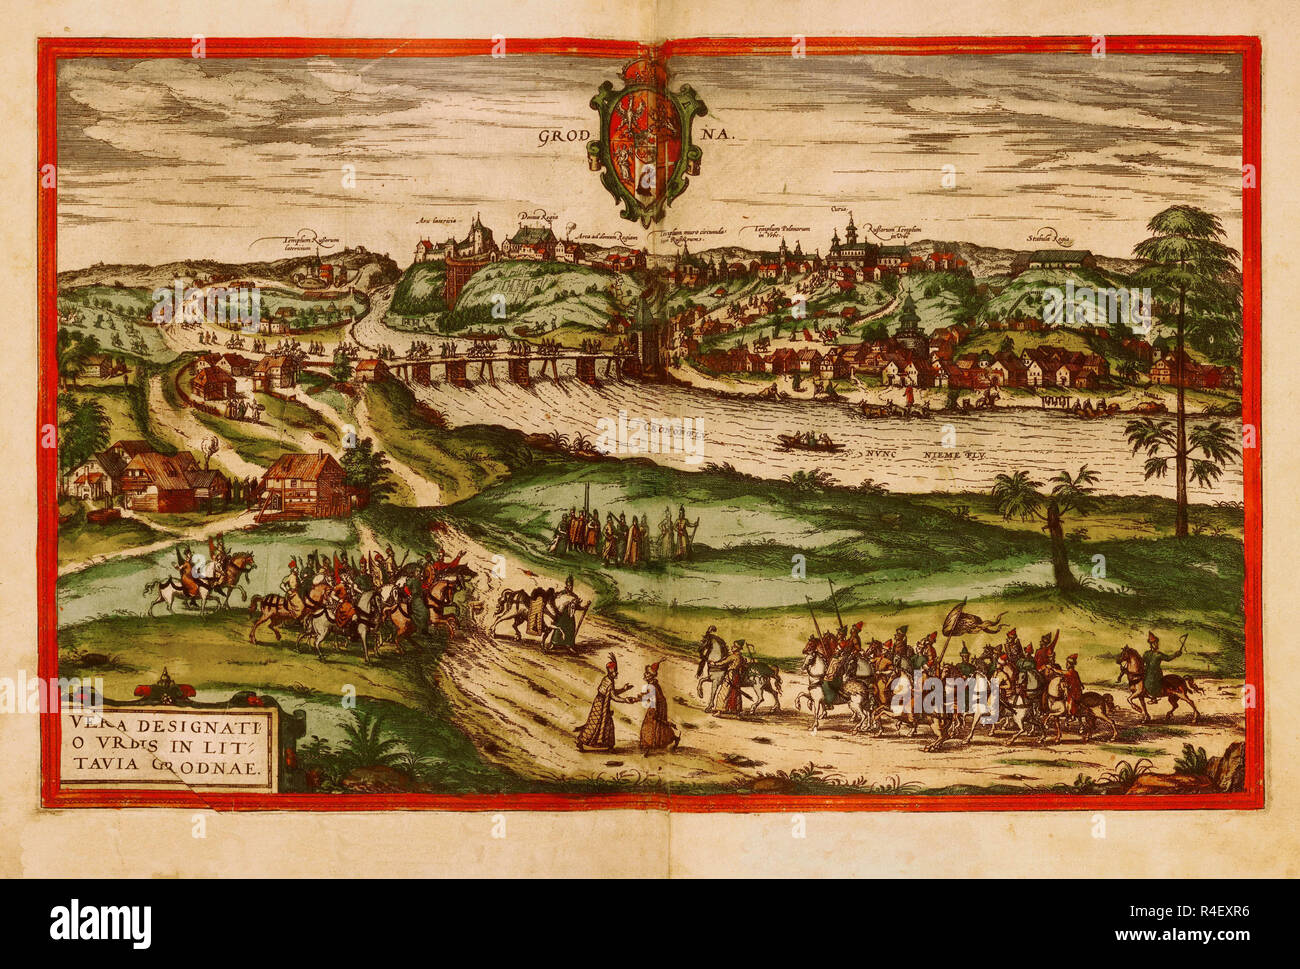 CIVITATES ORBIS TERRARUM - GRODNO (BIELORRUSIA) - GRABADO - 1575. Author: BRAUN GEORG 1541-1622 / HOGENBERG FRANS. Location: PRIVATE COLLECTION. Stock Photo